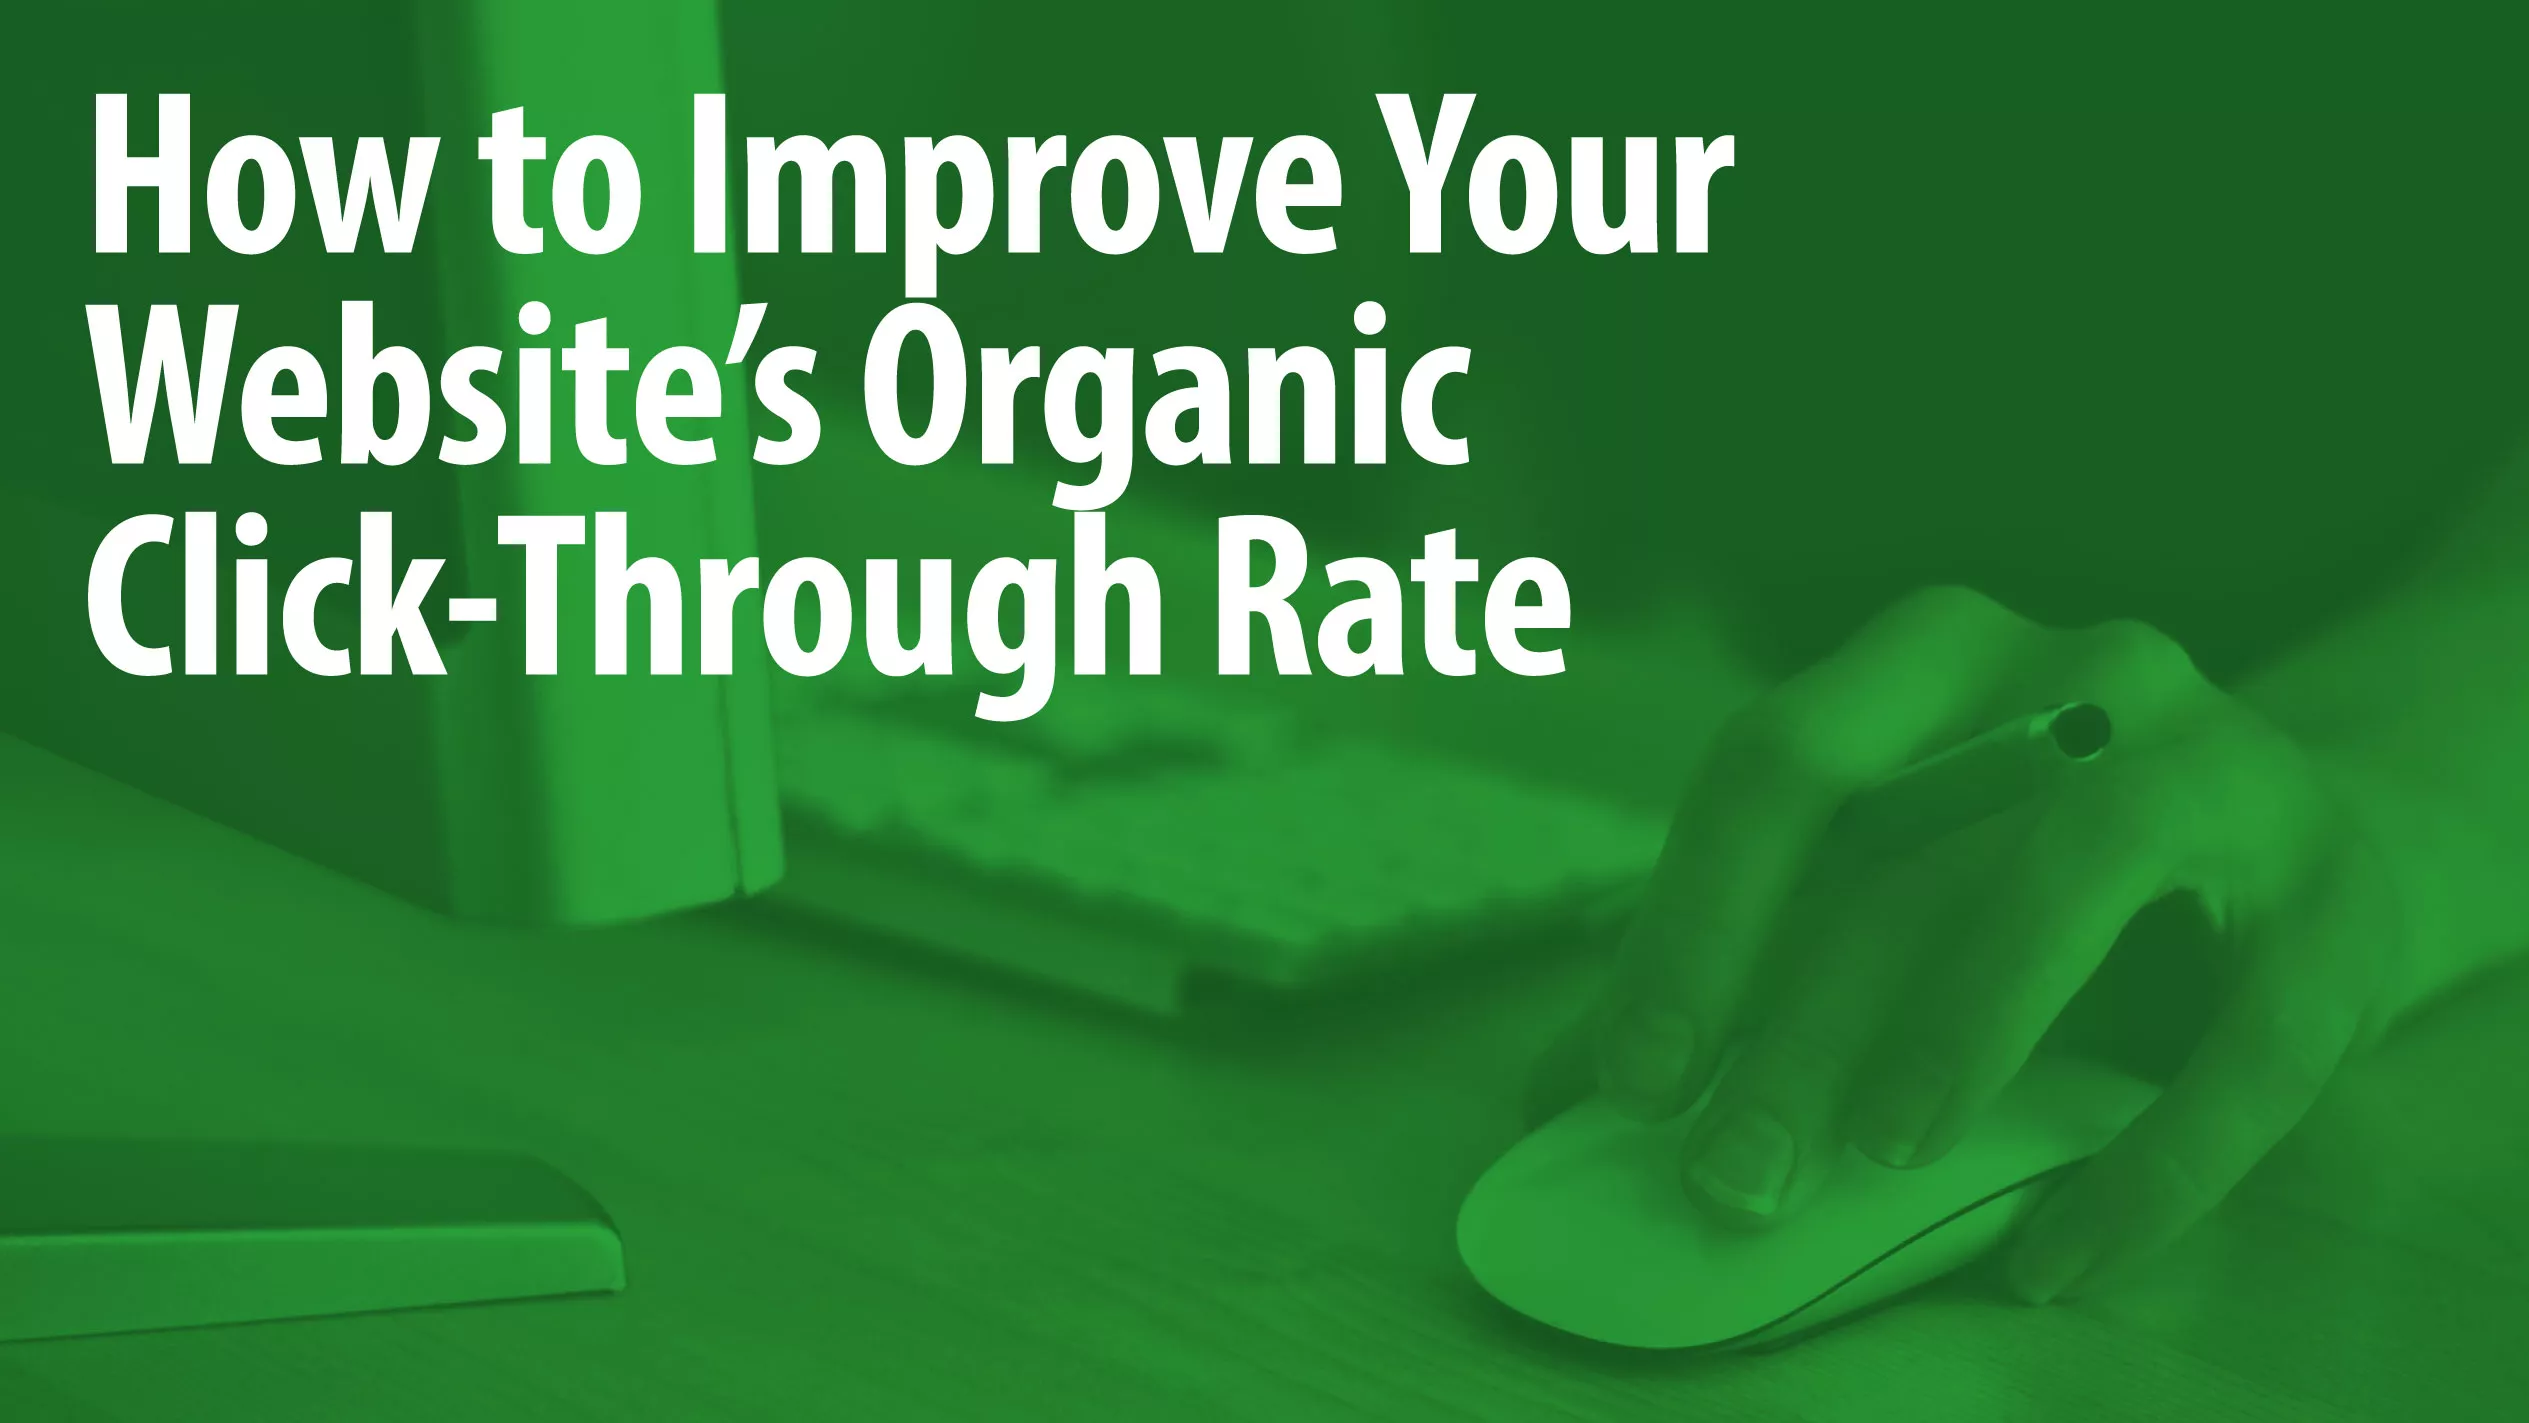 Organic Click Through Rate Article Header